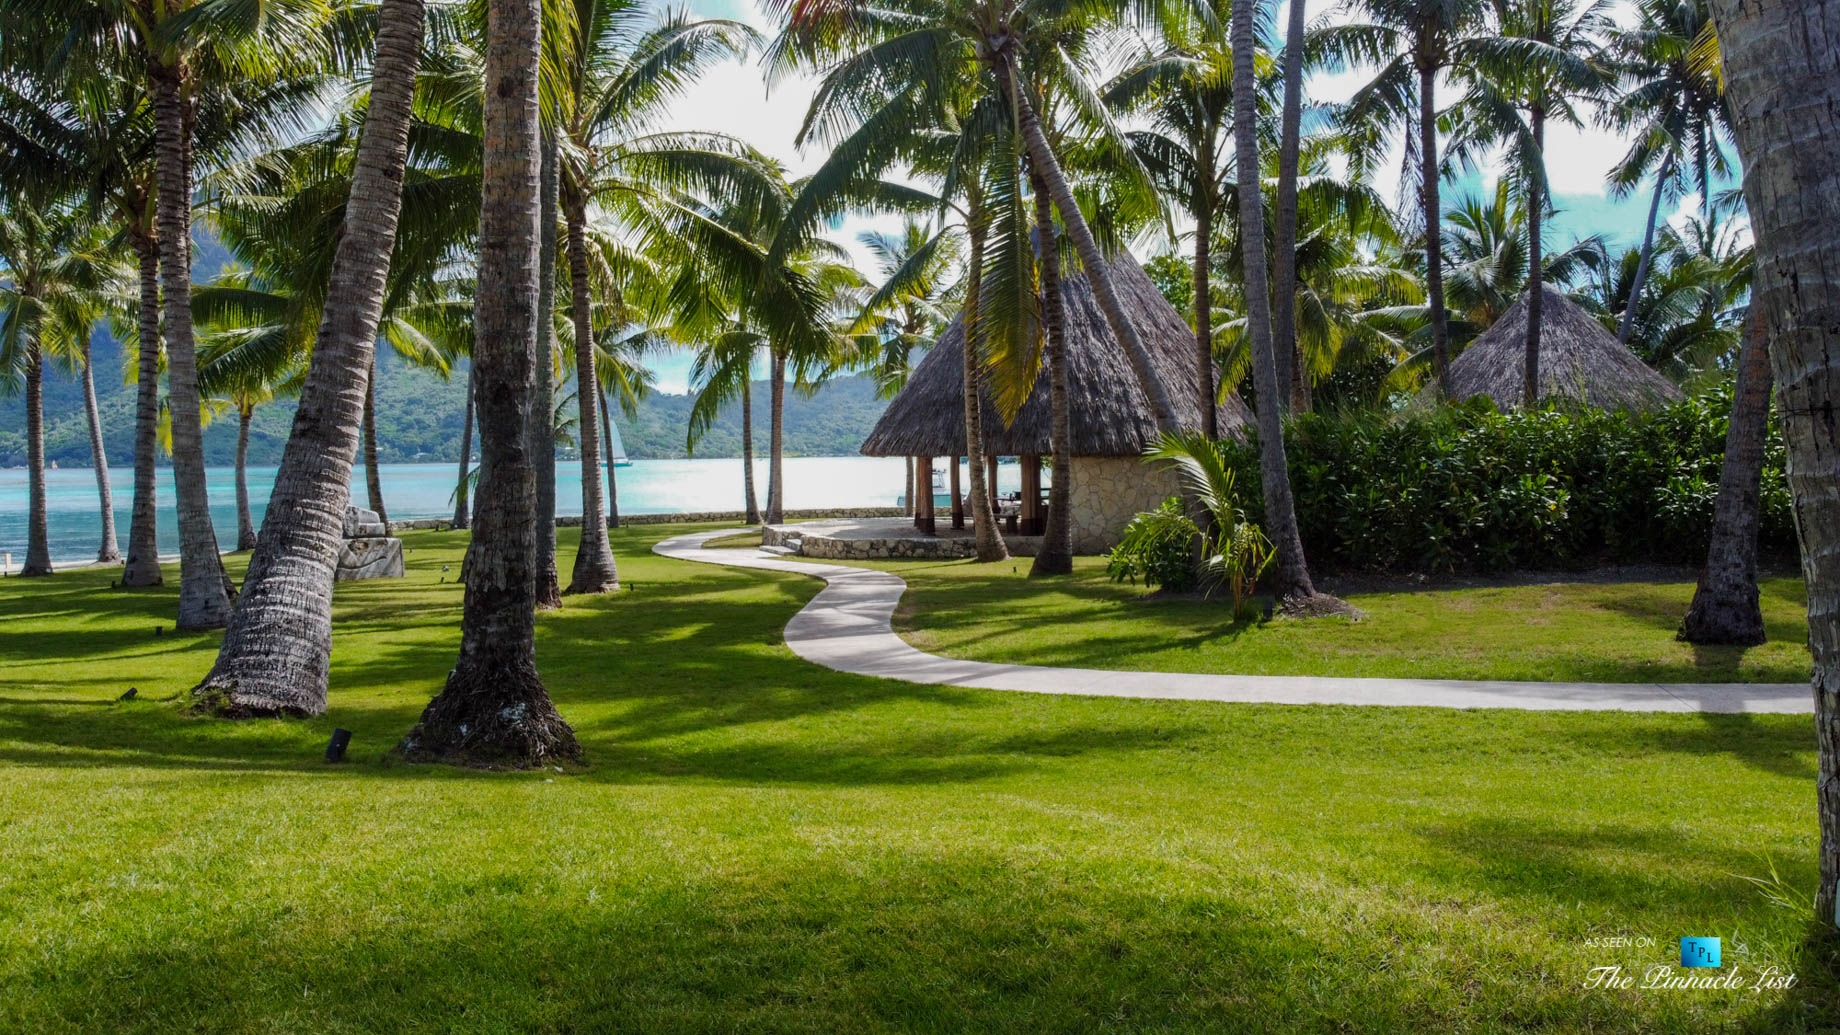 Villa Aquamaris – Motu Roa, Bora Bora, French Polynesia